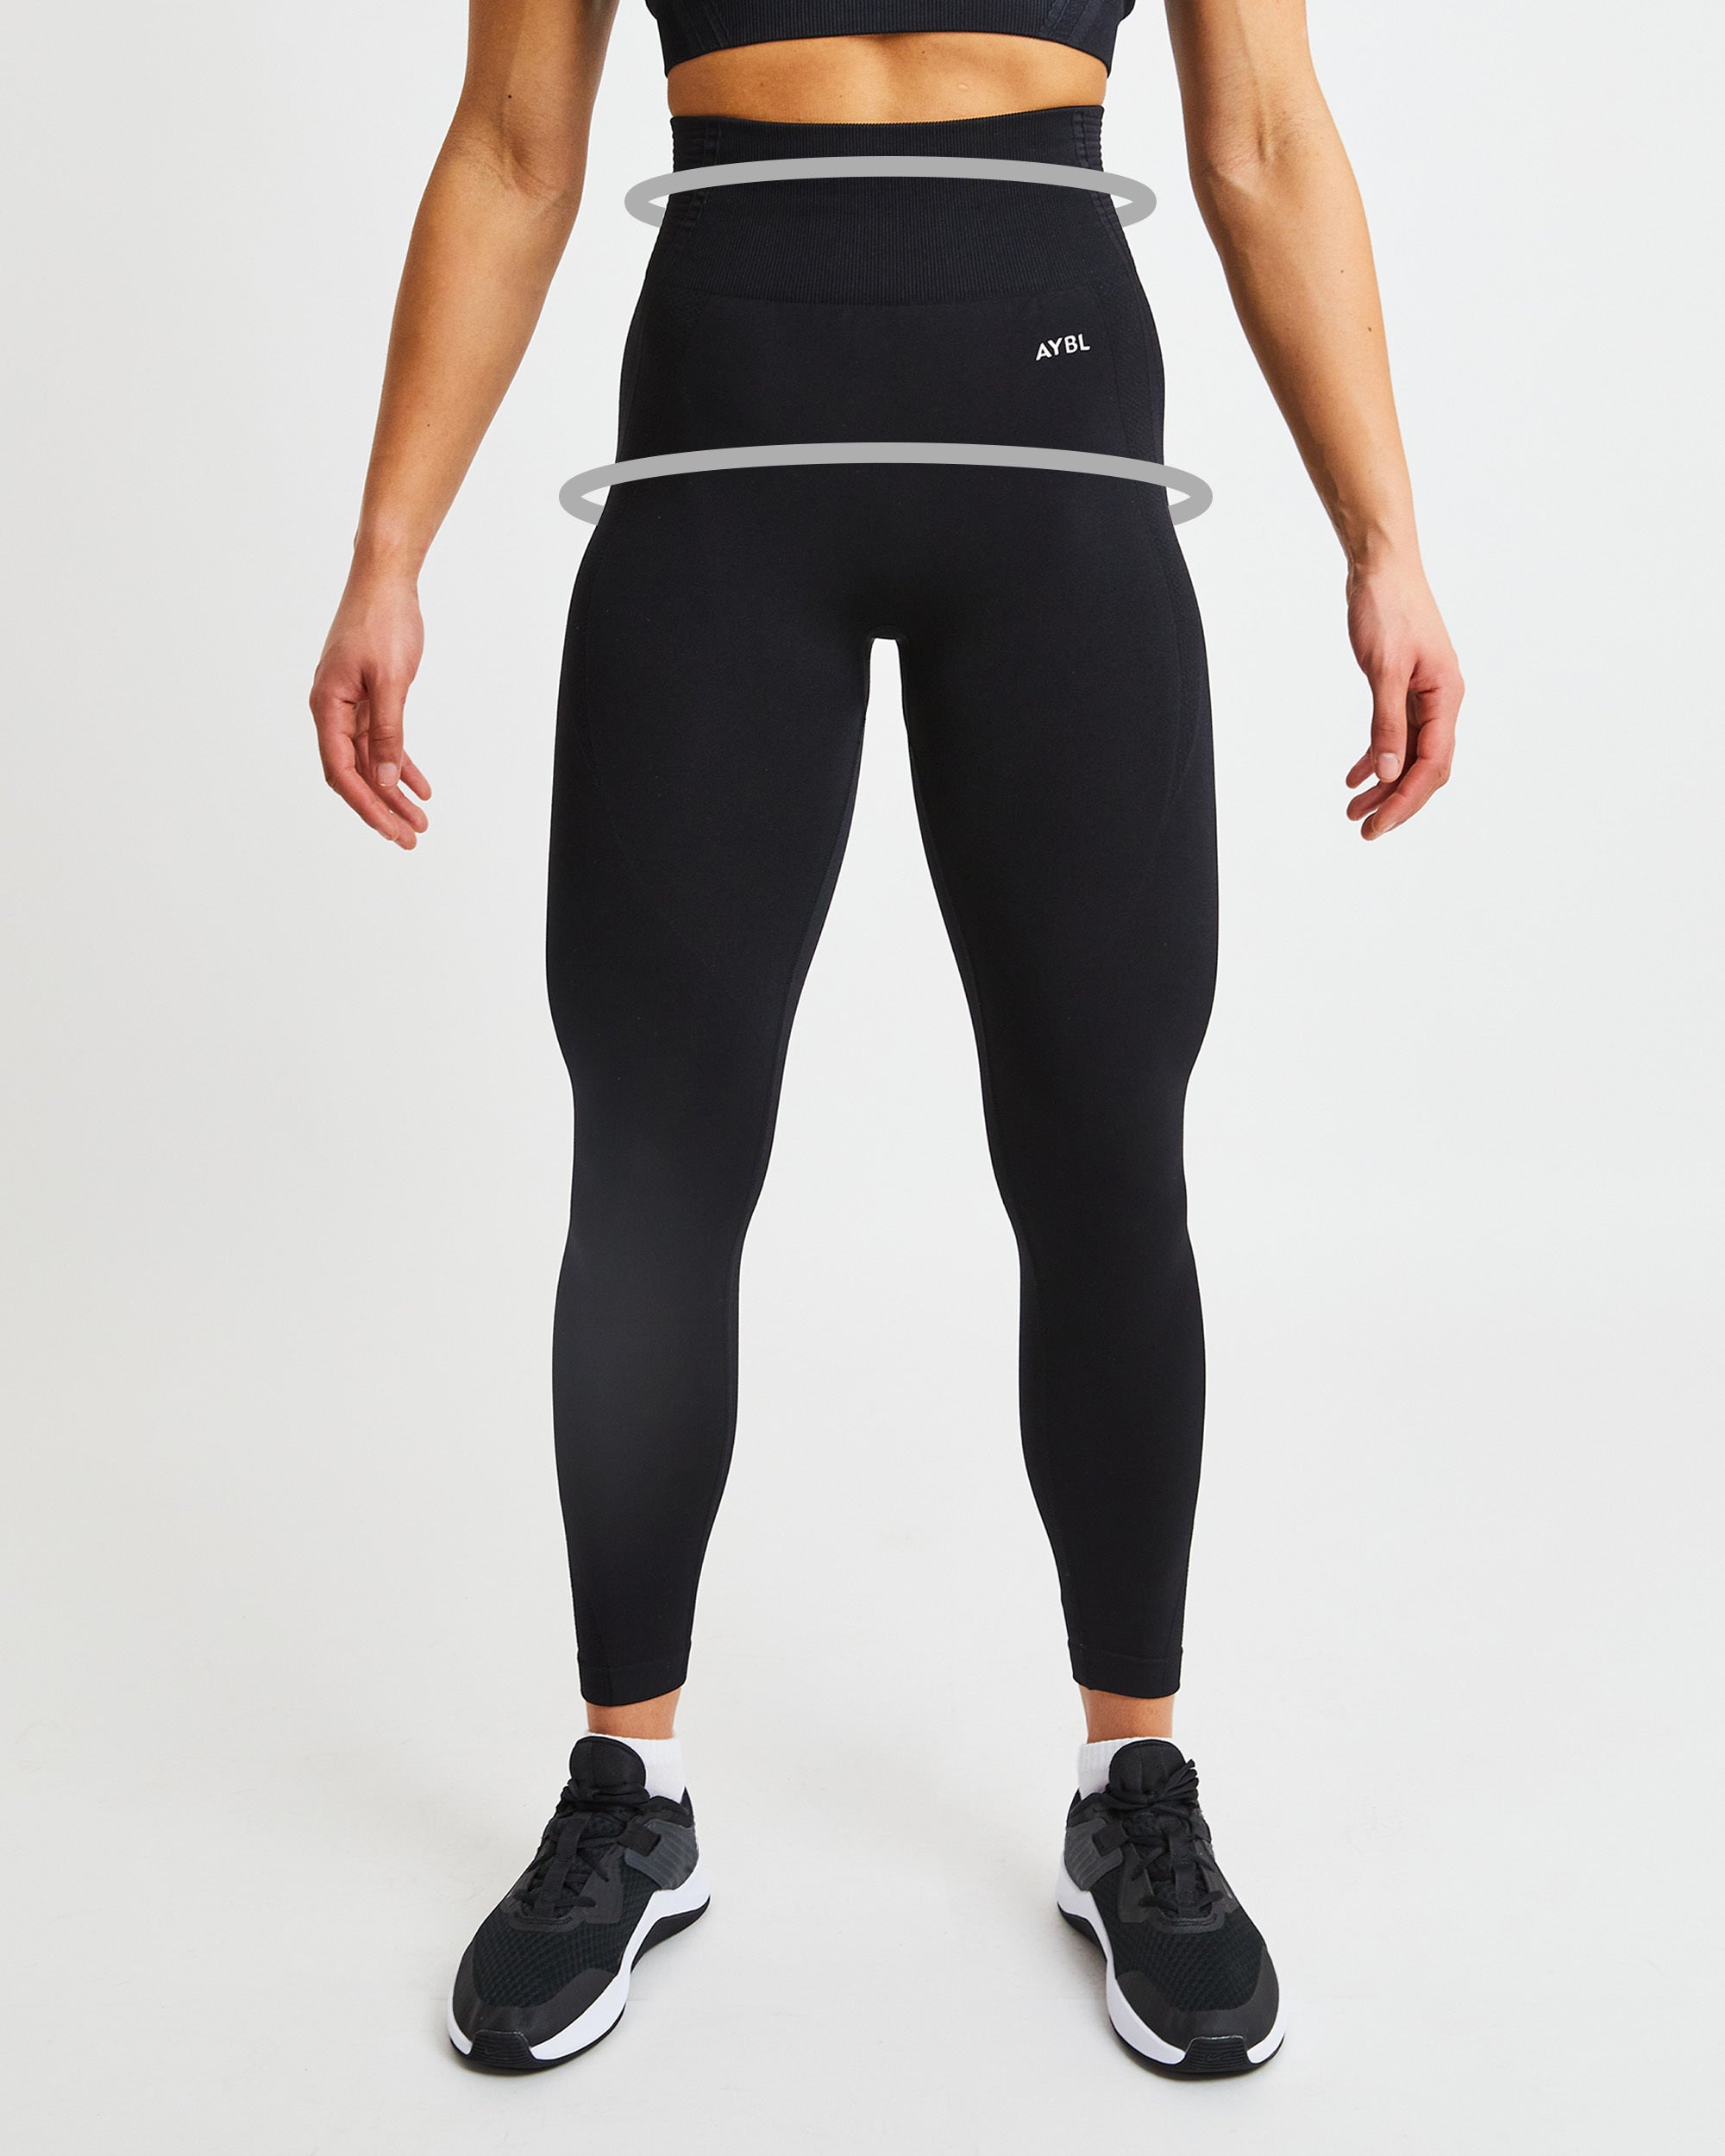 AYBL - Those Motion leggings.. 💁‍♀️ Comment your favourite leggings below  - Pulse, Motion, Balance V2 or Core? 🔥 📷:@Nikillae #BeAYBL